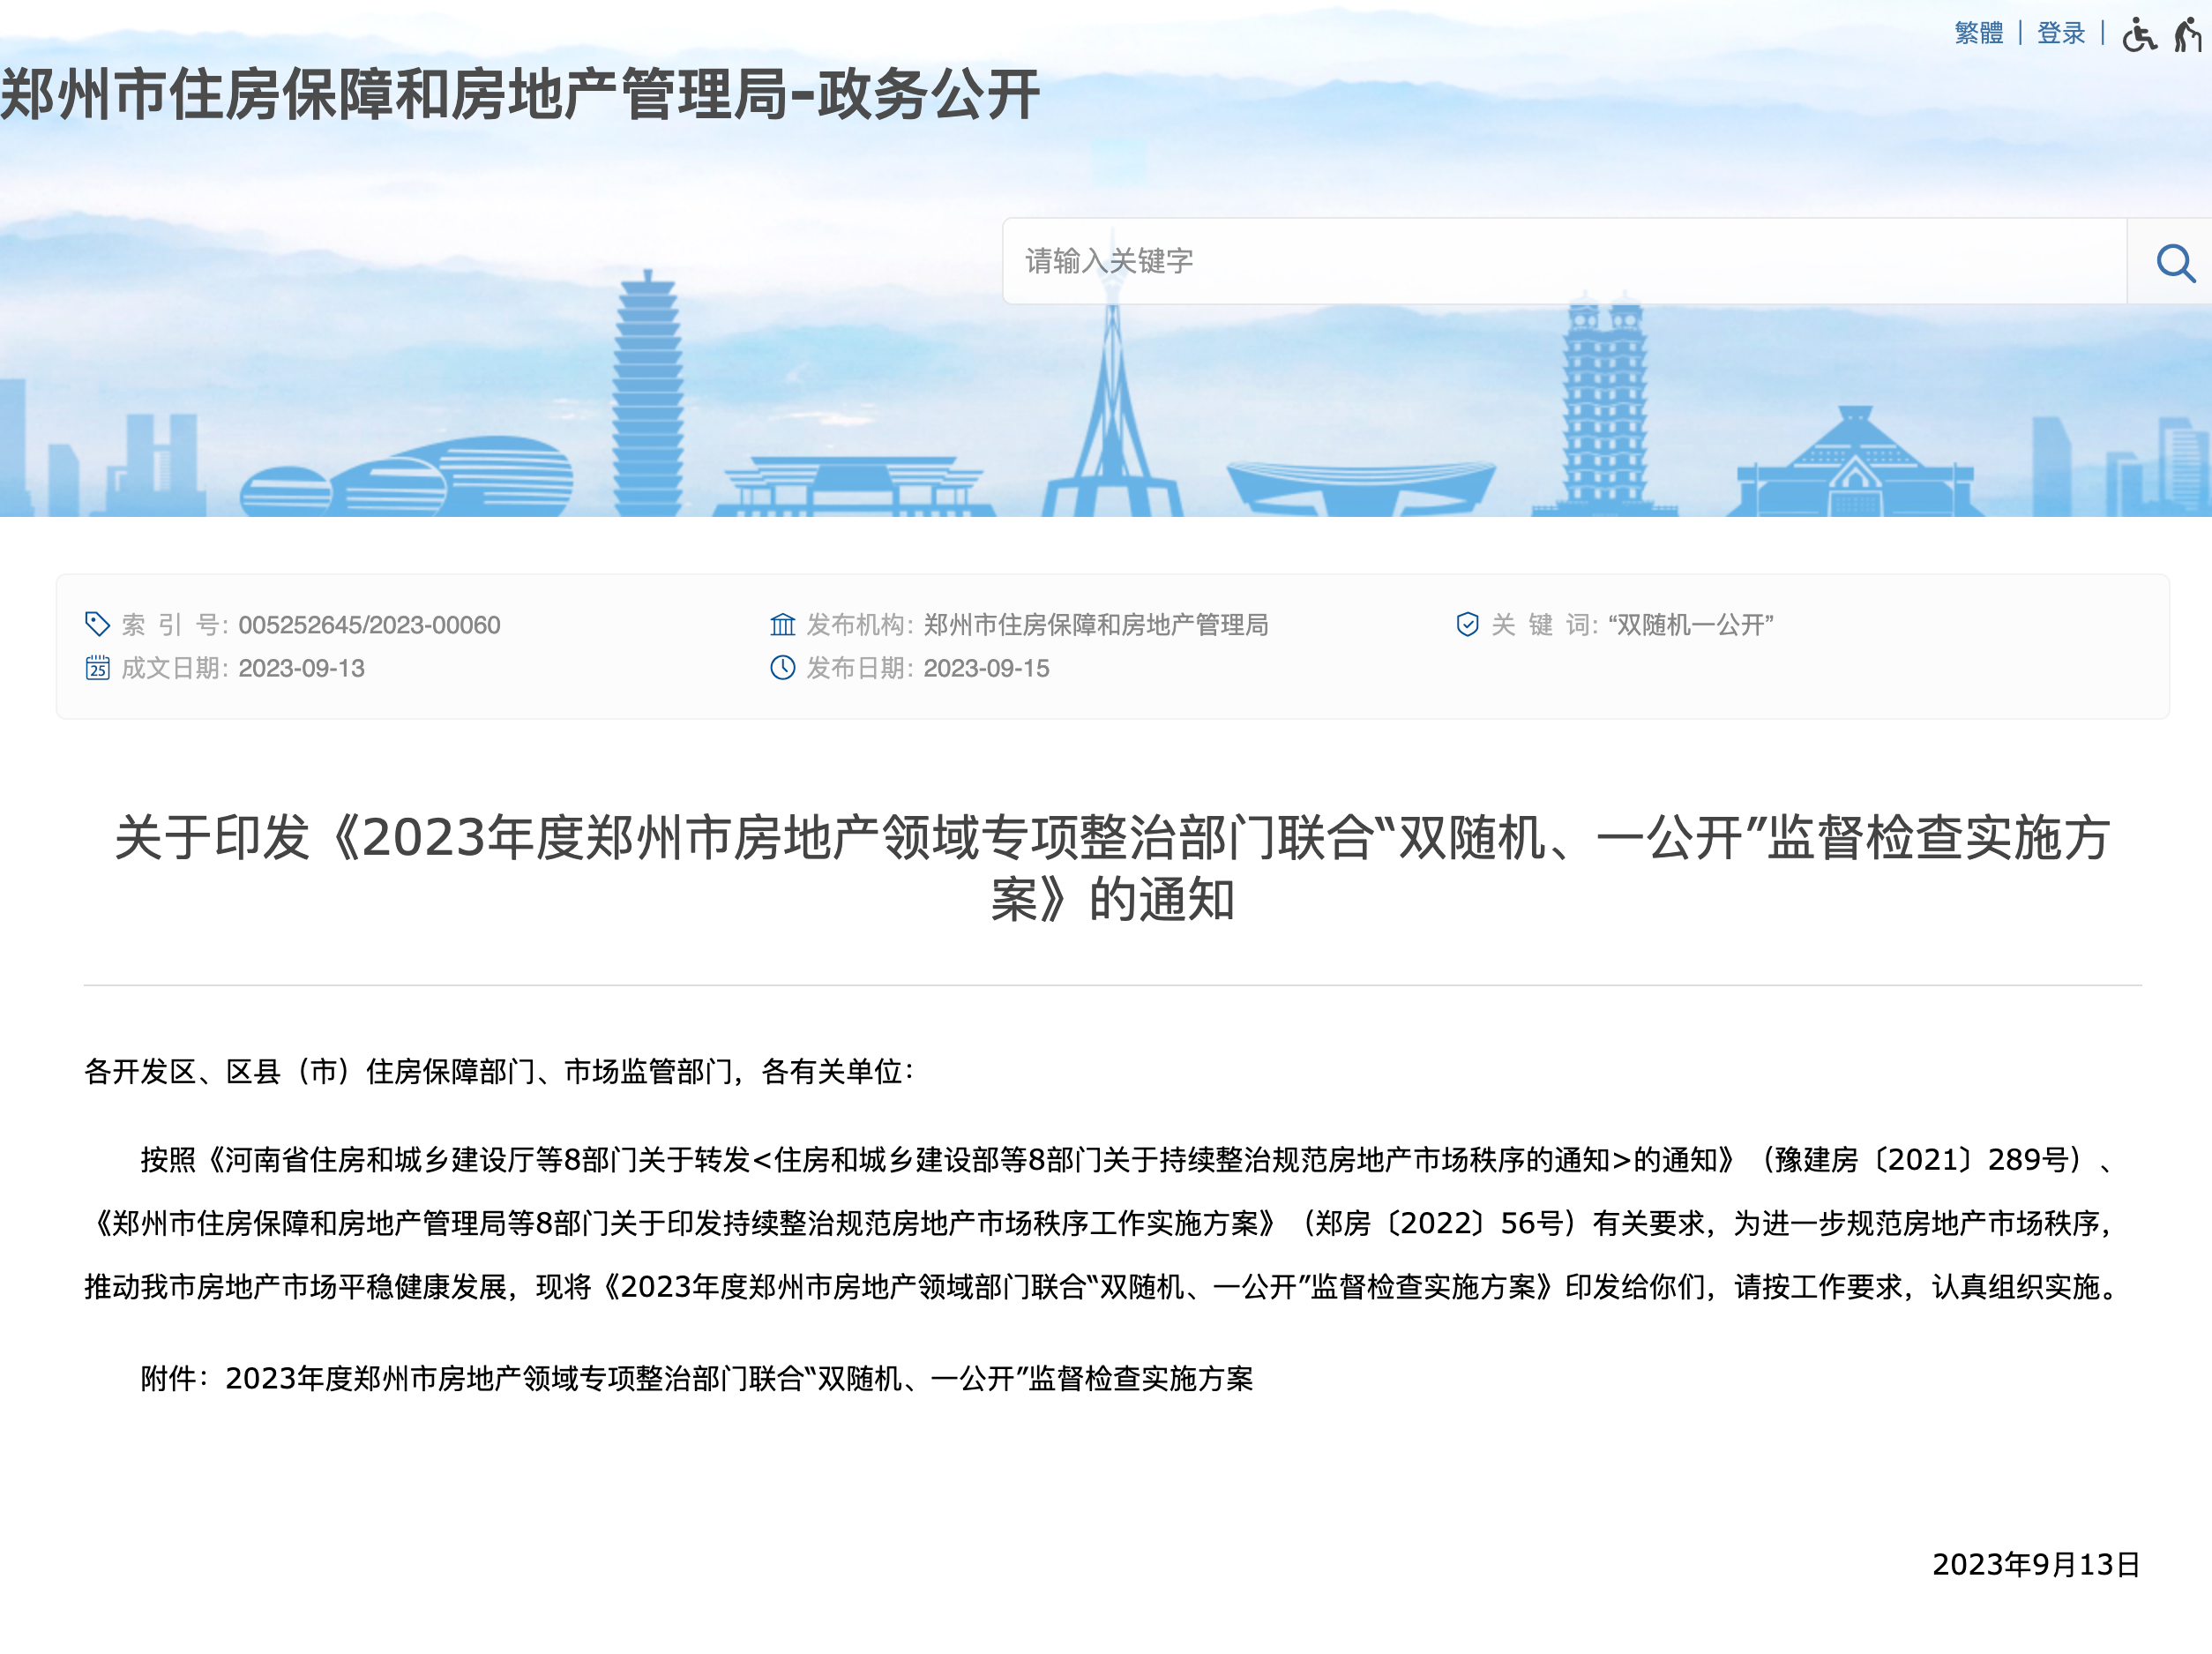 FireShot Capture 043 - 关于印发《2023年度郑州市房地产领域专项整治部门联合“双随机、一公开”监